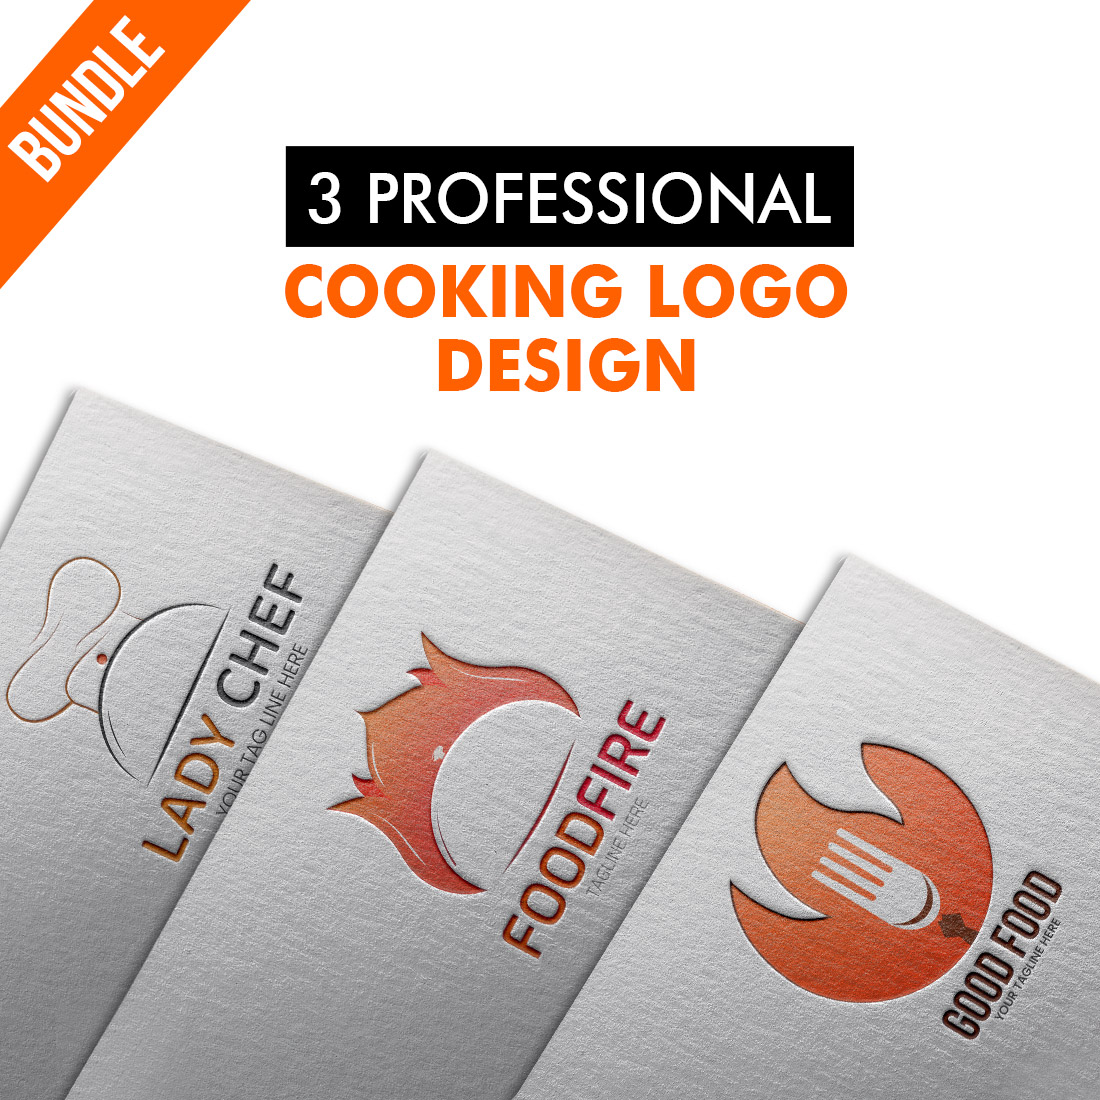 3 Cooking Logo Design bundle 8$ cover image.